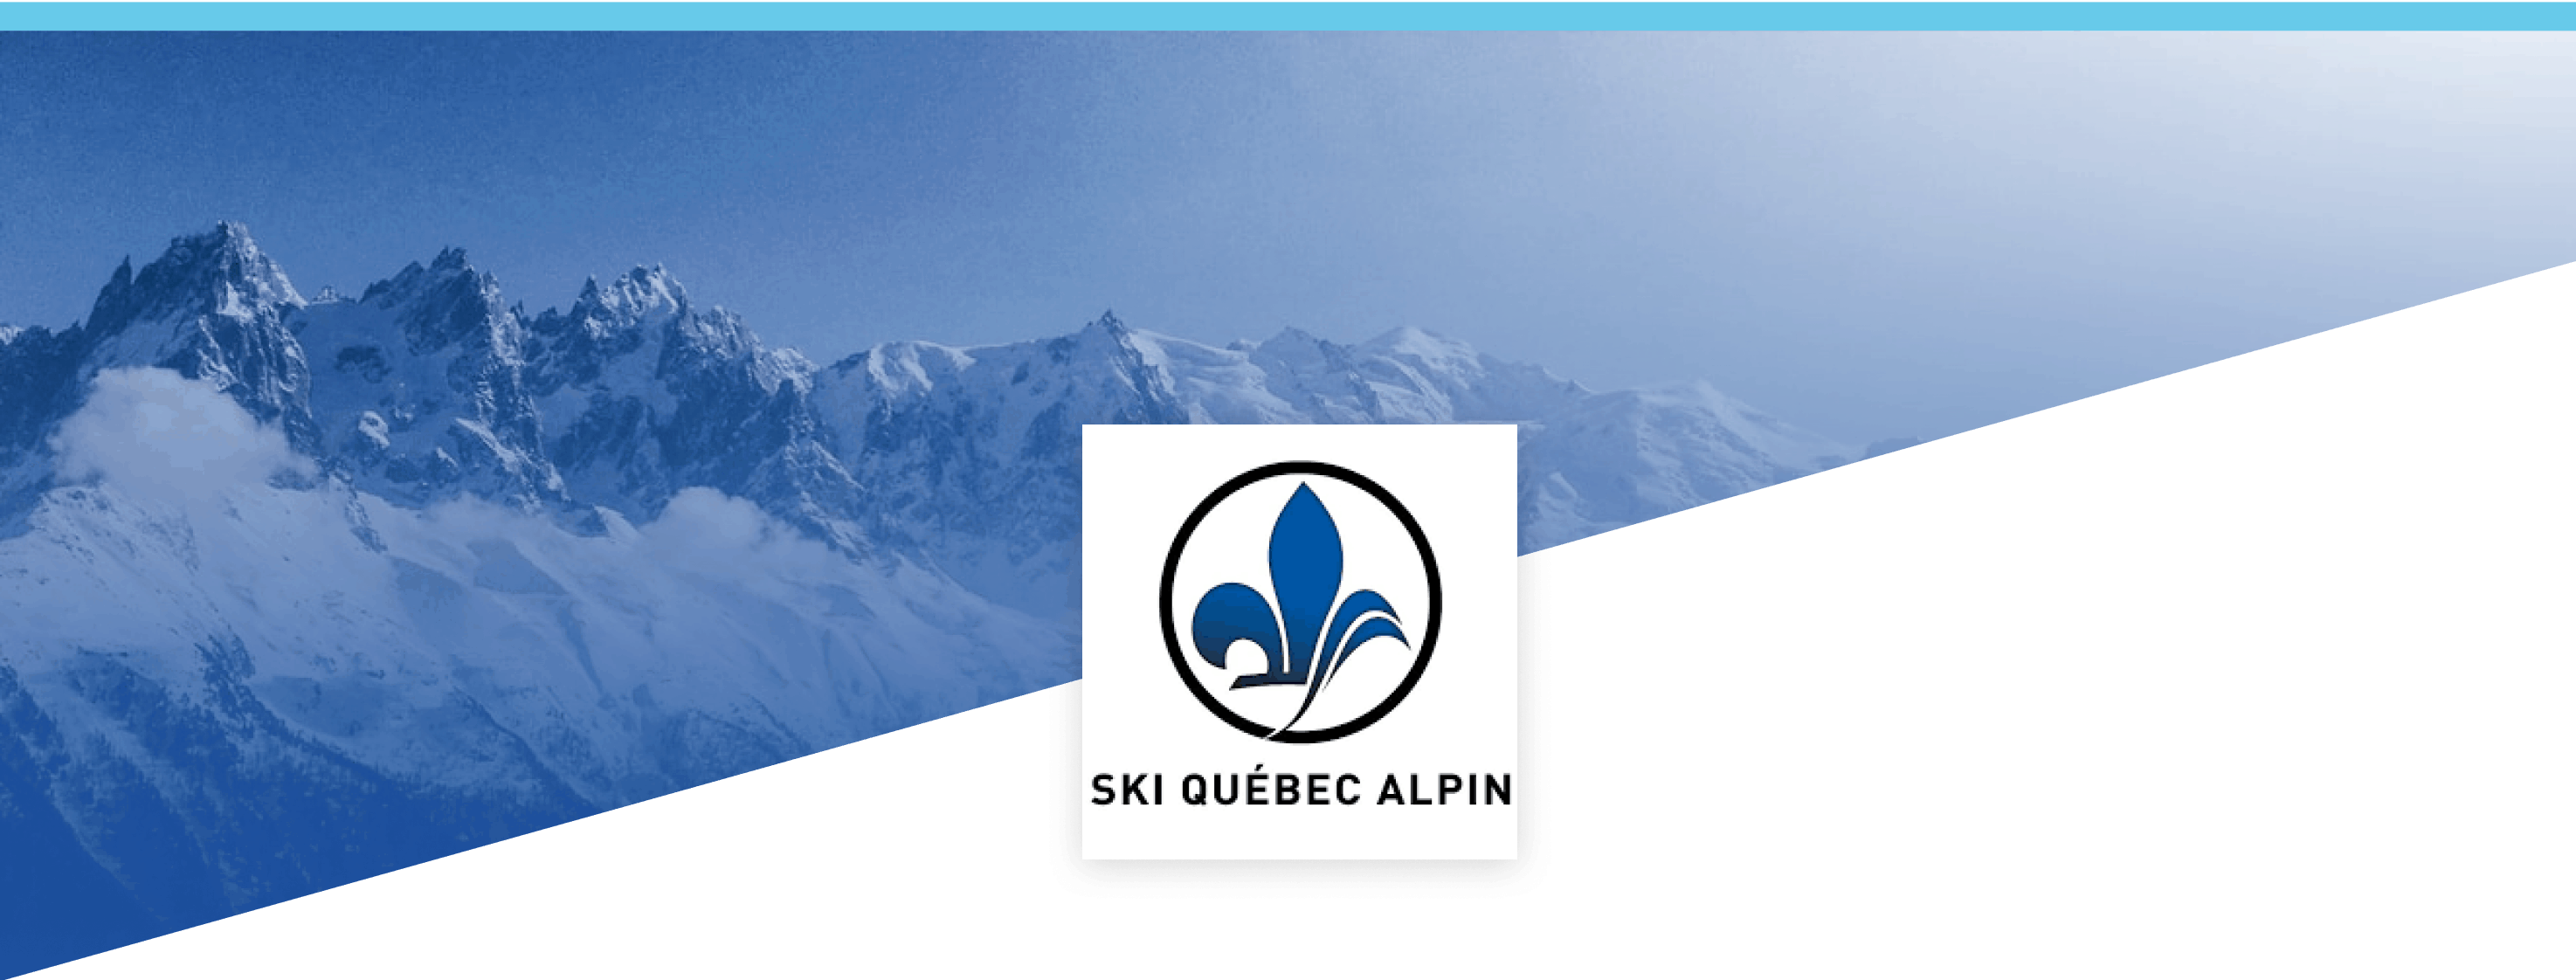 Logo ski Quebec Alpin